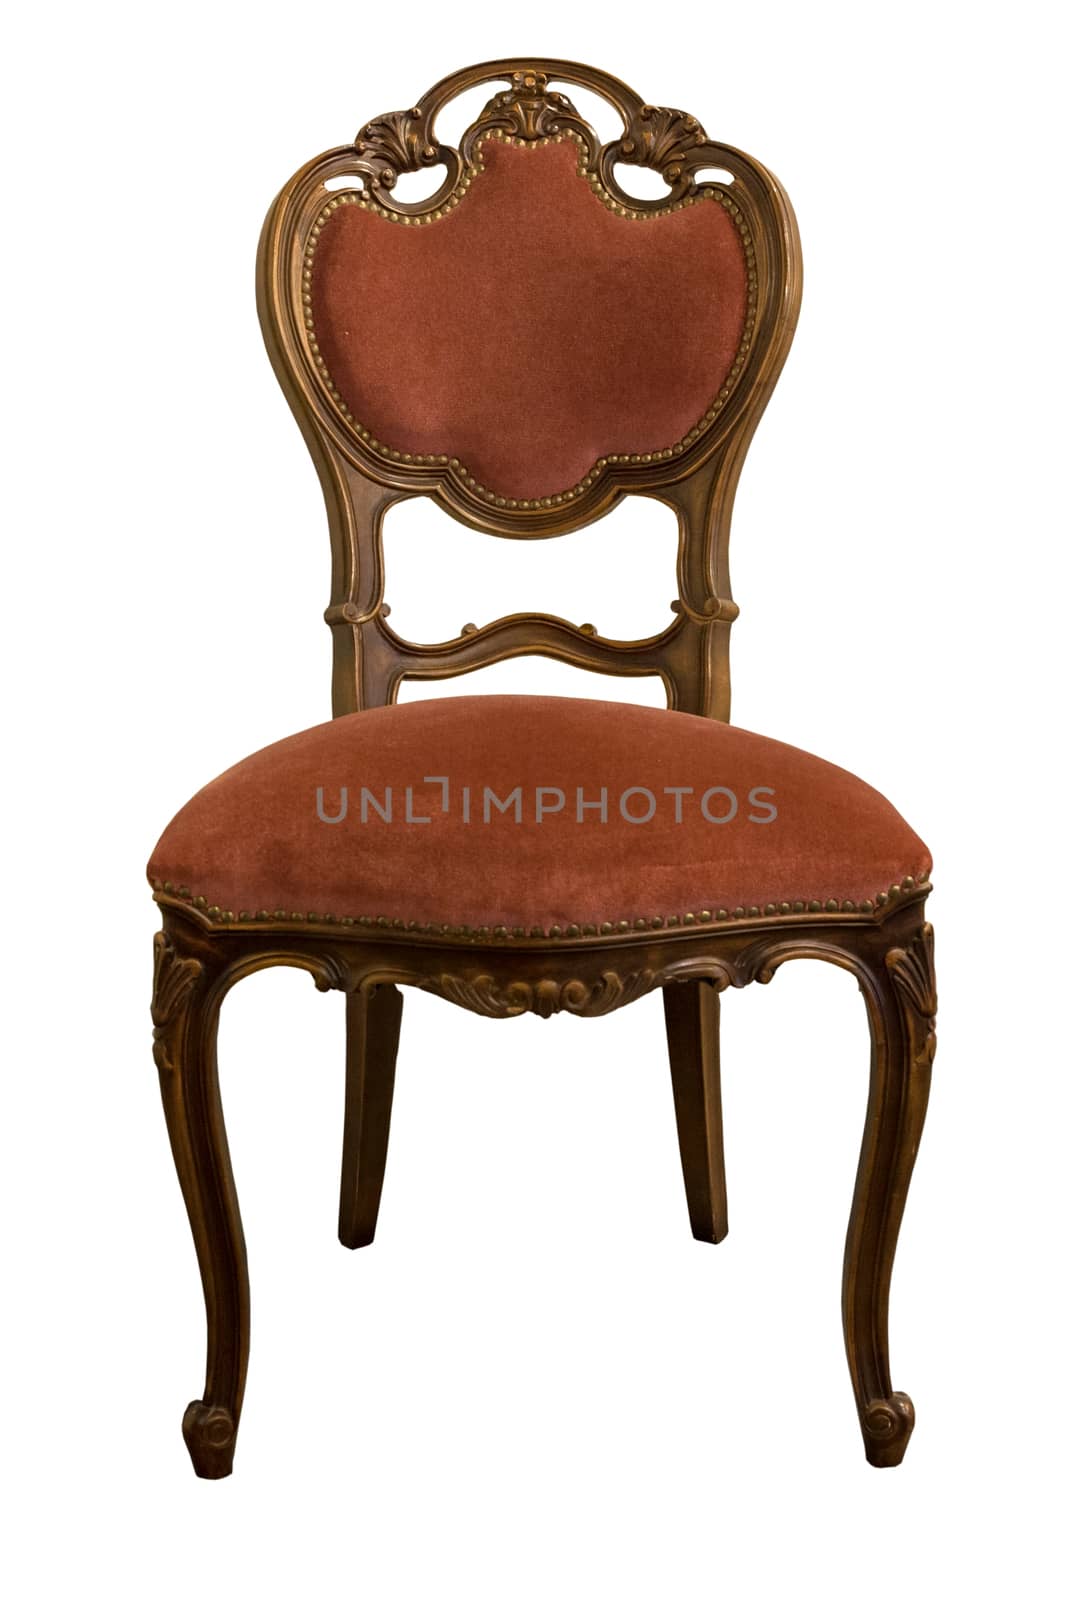 Antique furniture by Nikonas